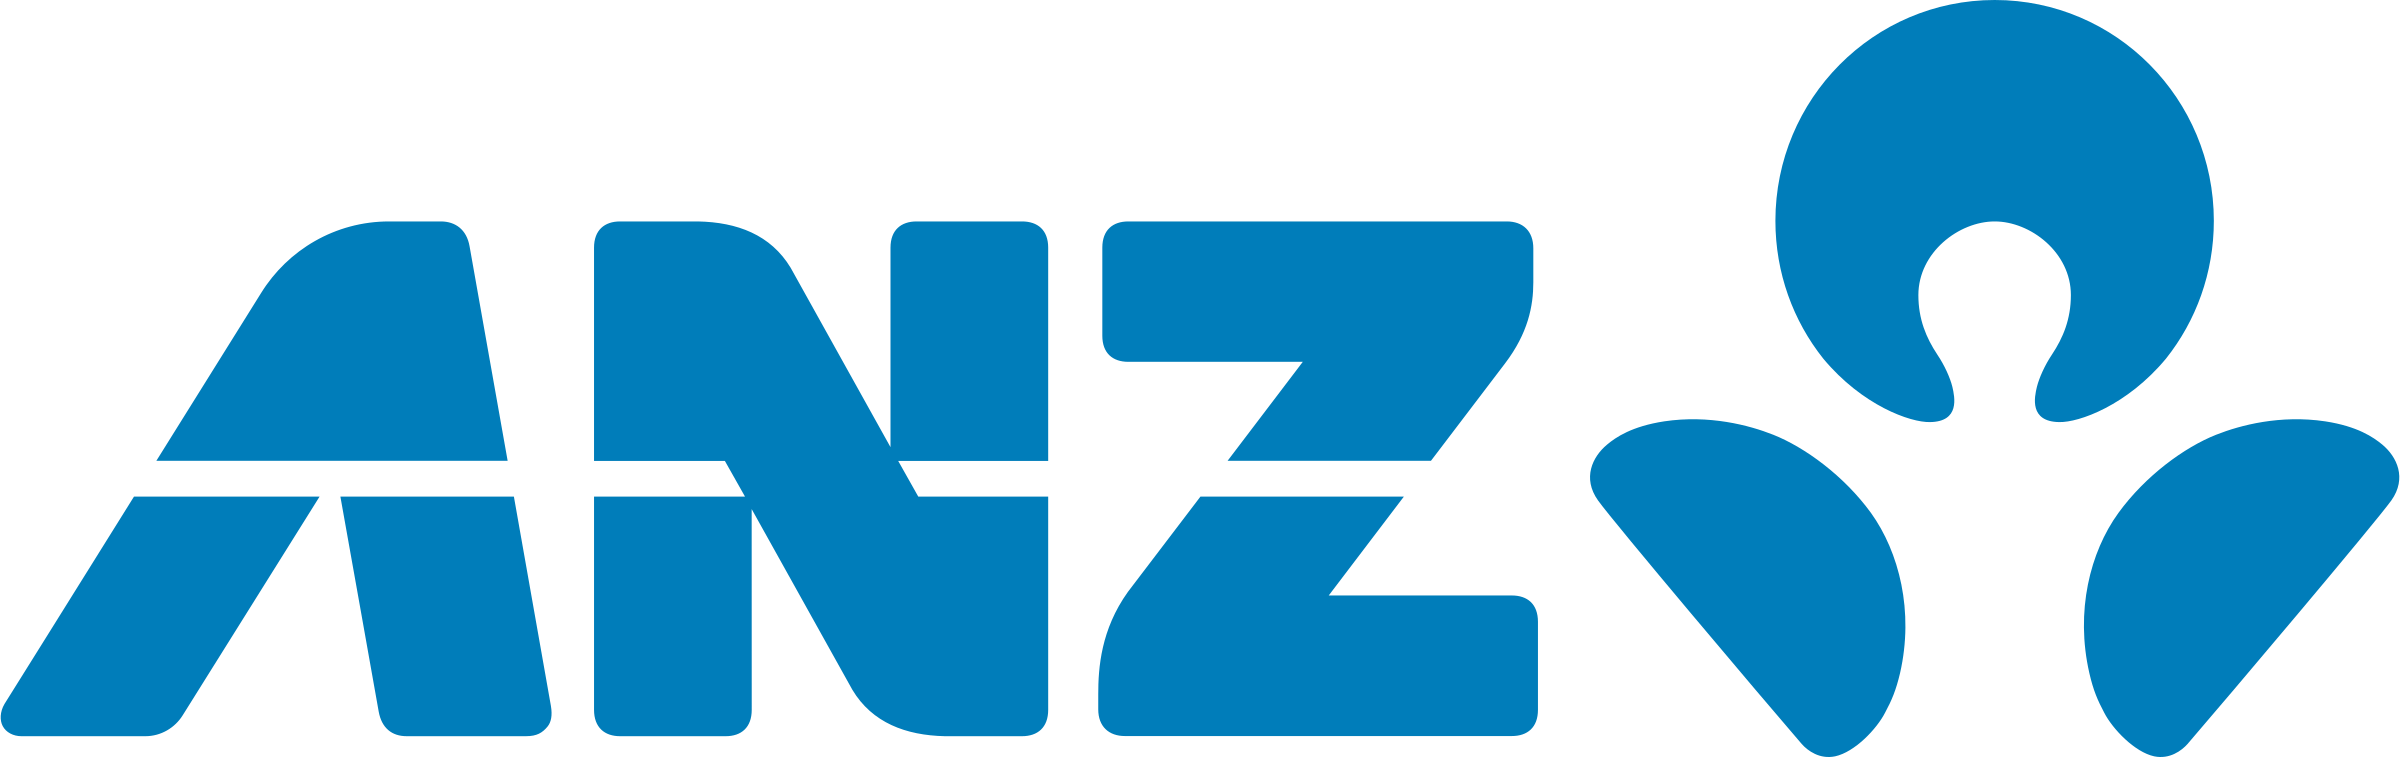 anz-2-logo-png-transparent